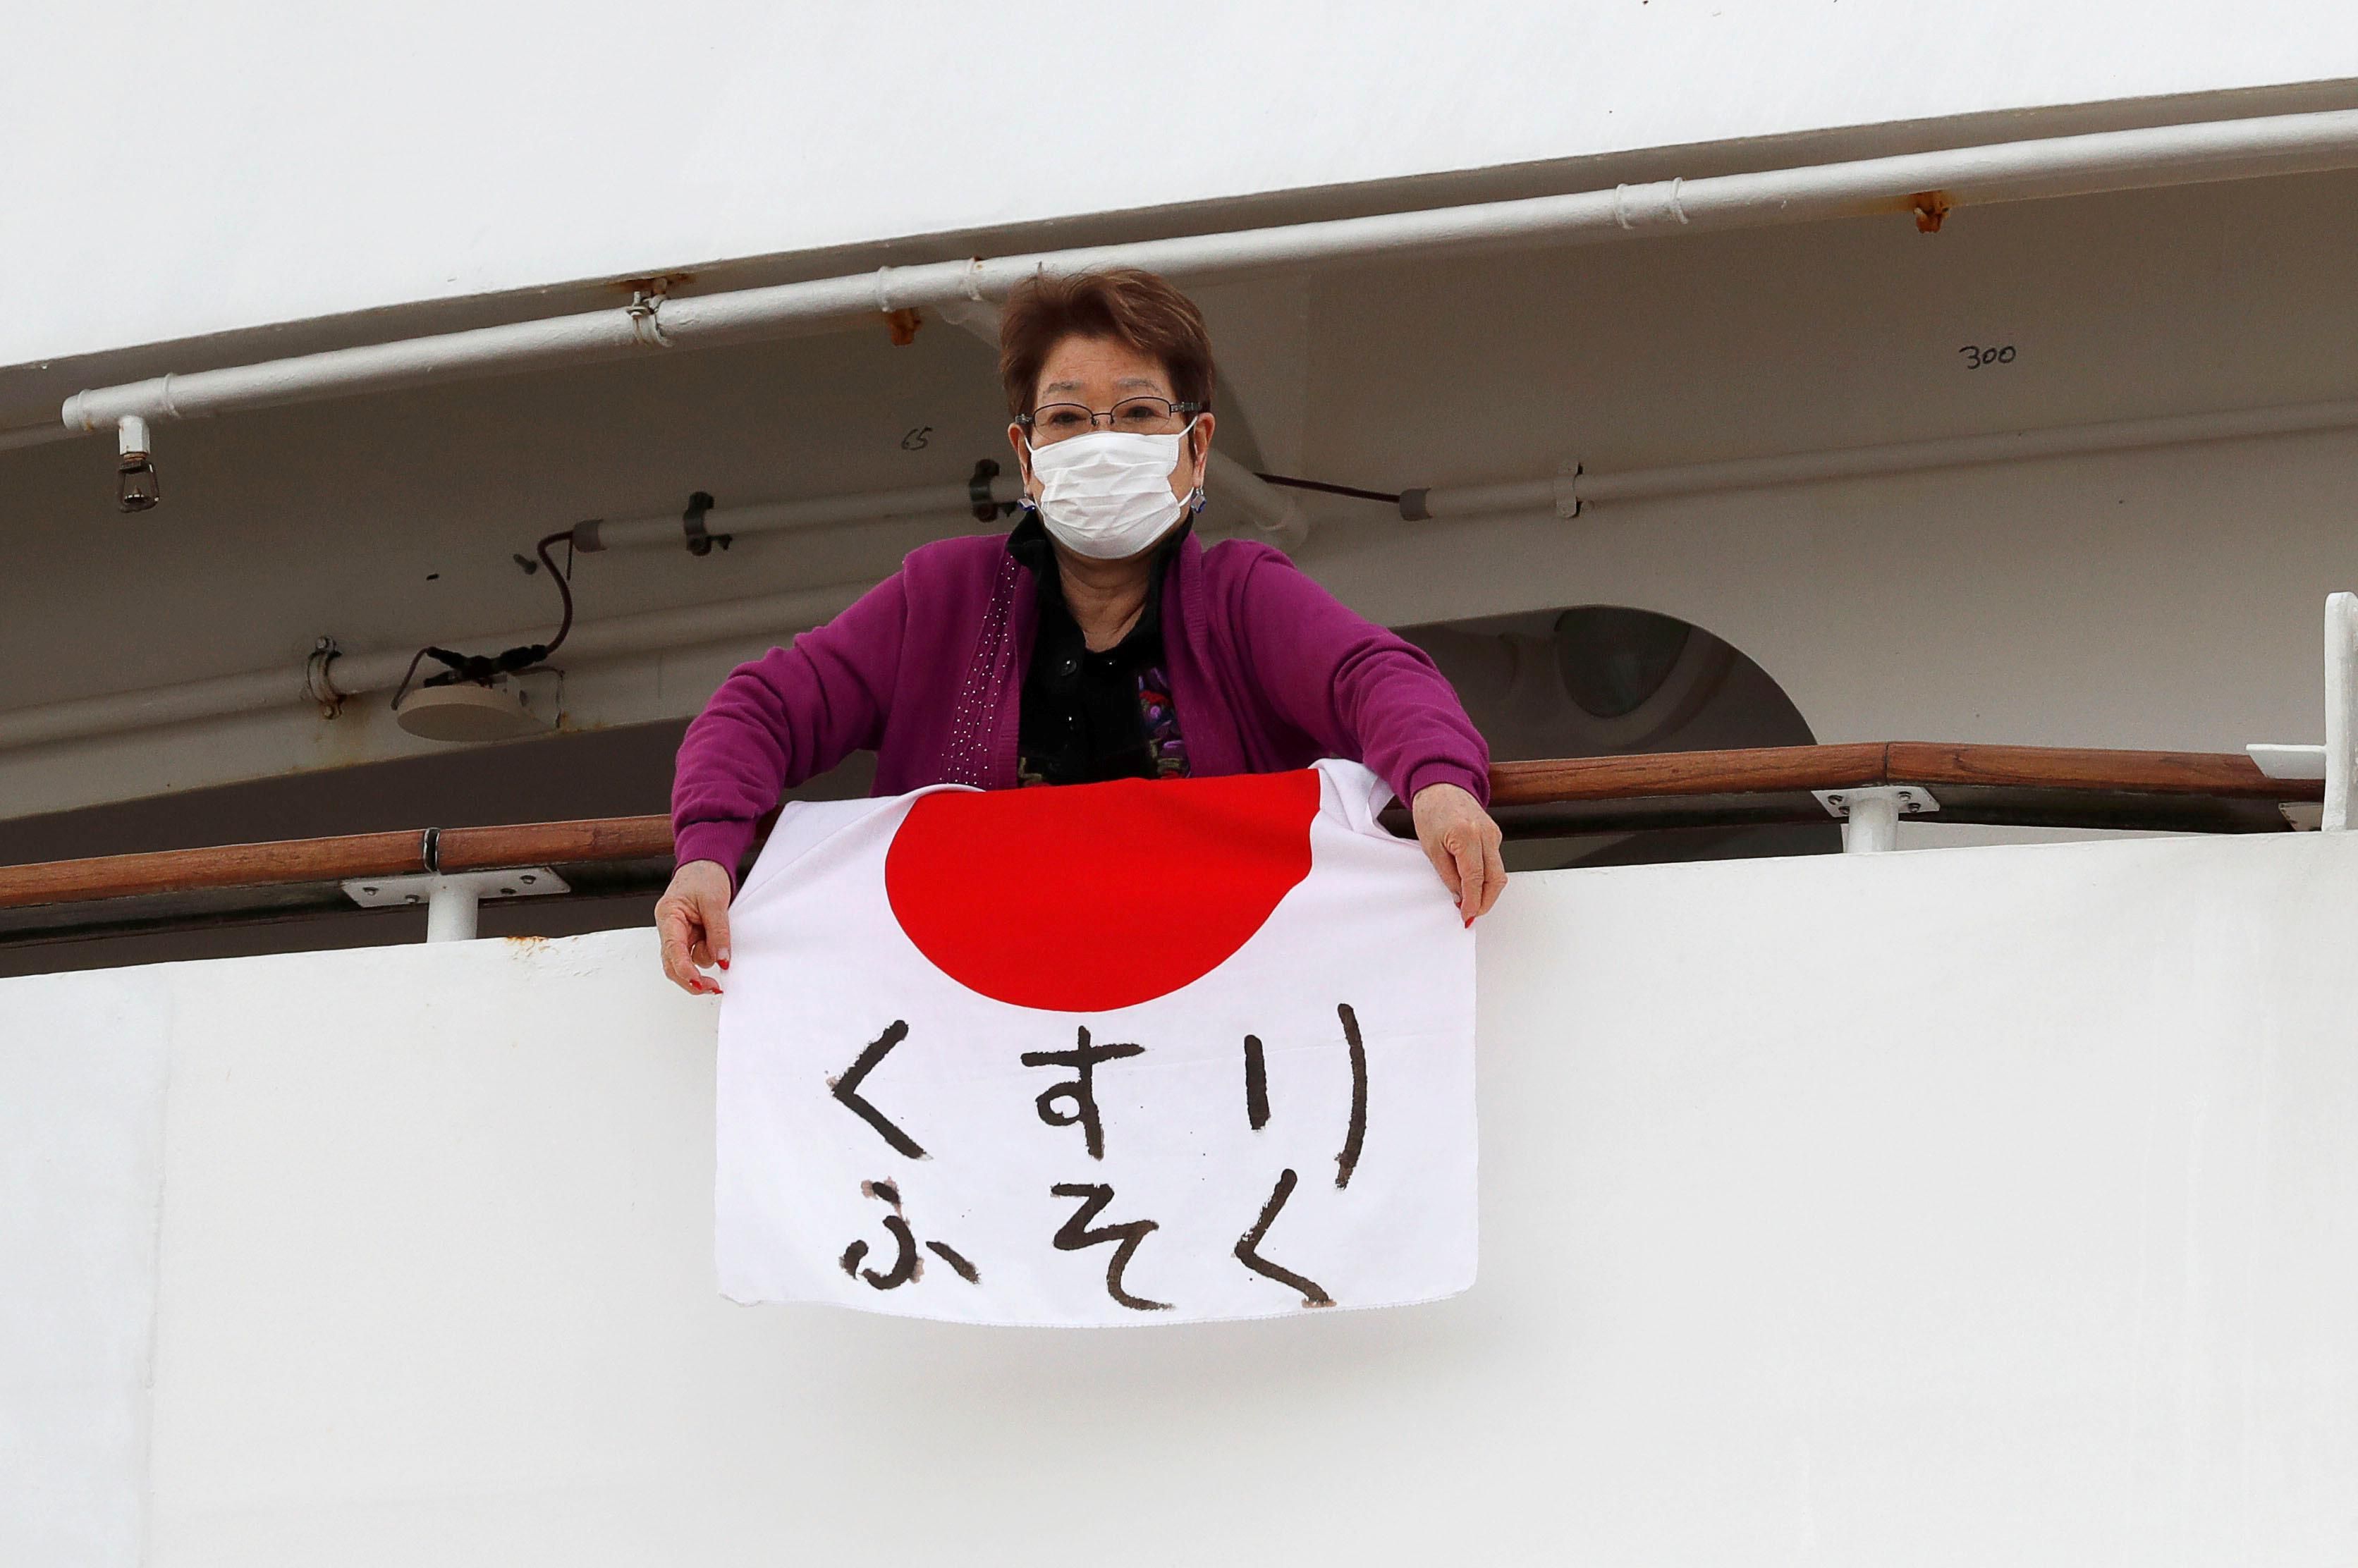 Коронавирус на лайнере, Япония – новости, количество заболевших